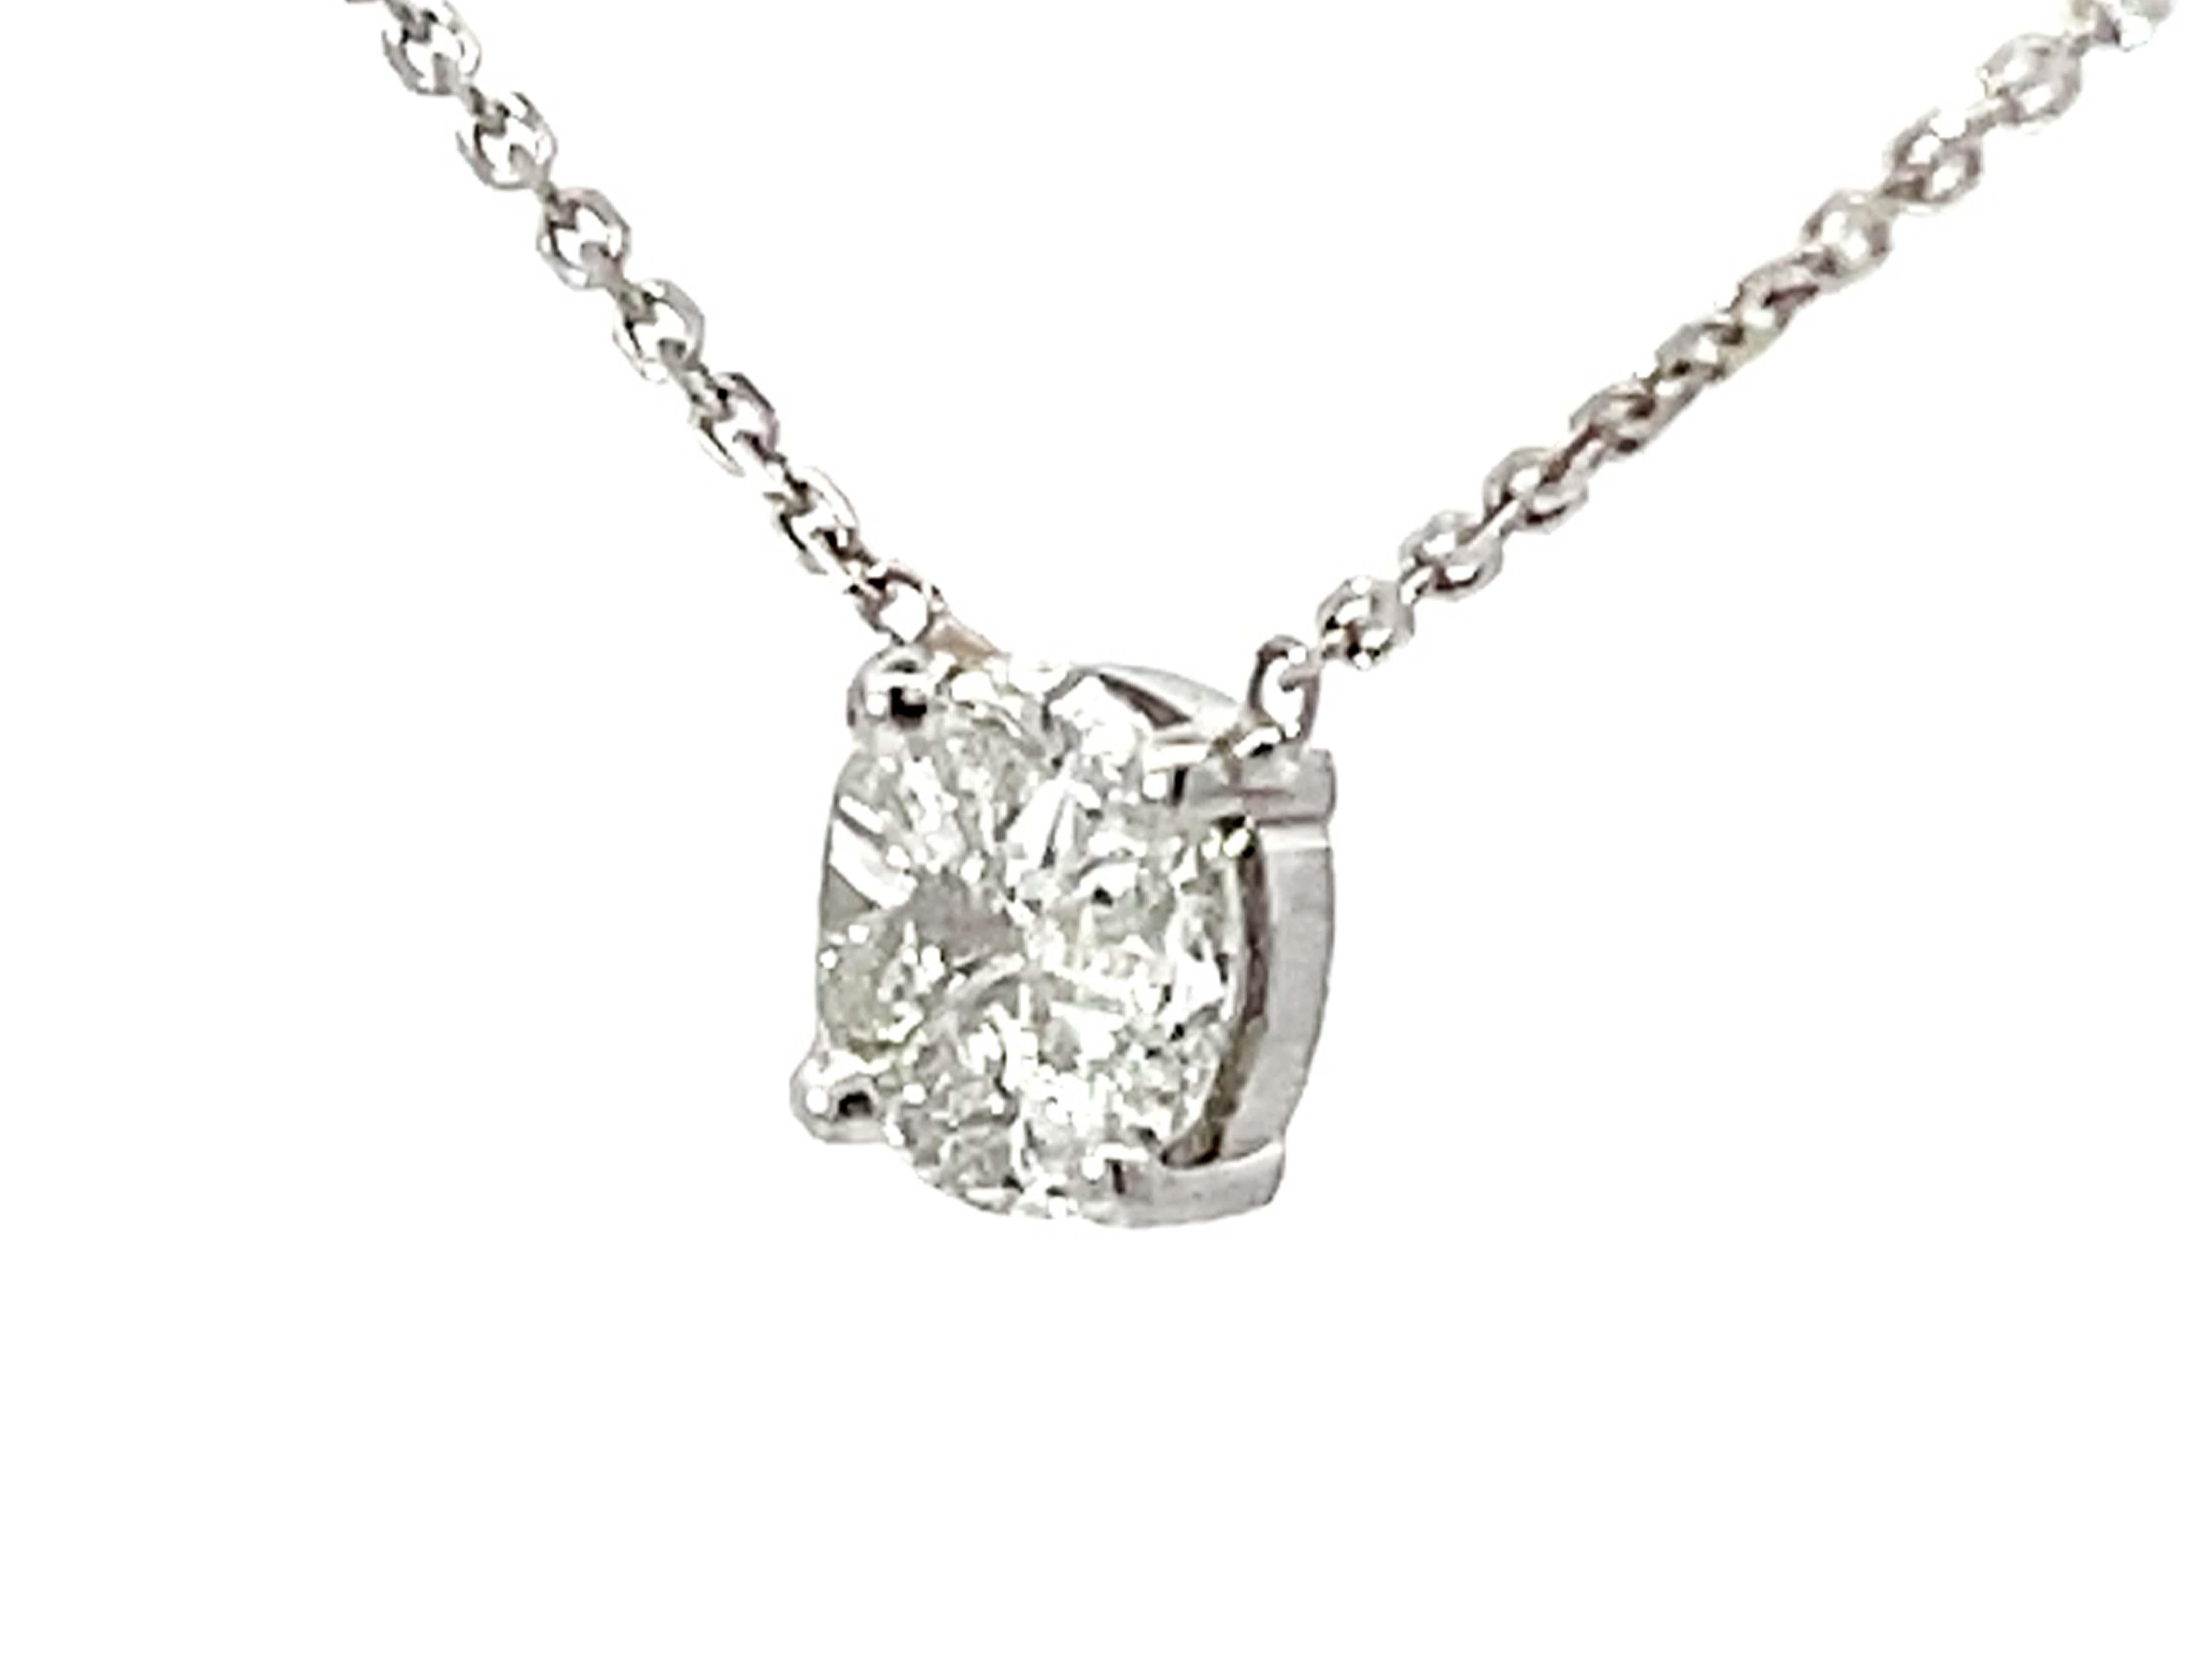 Brilliant Cut Piecut Diamond Necklace Solid 18k White Gold For Sale